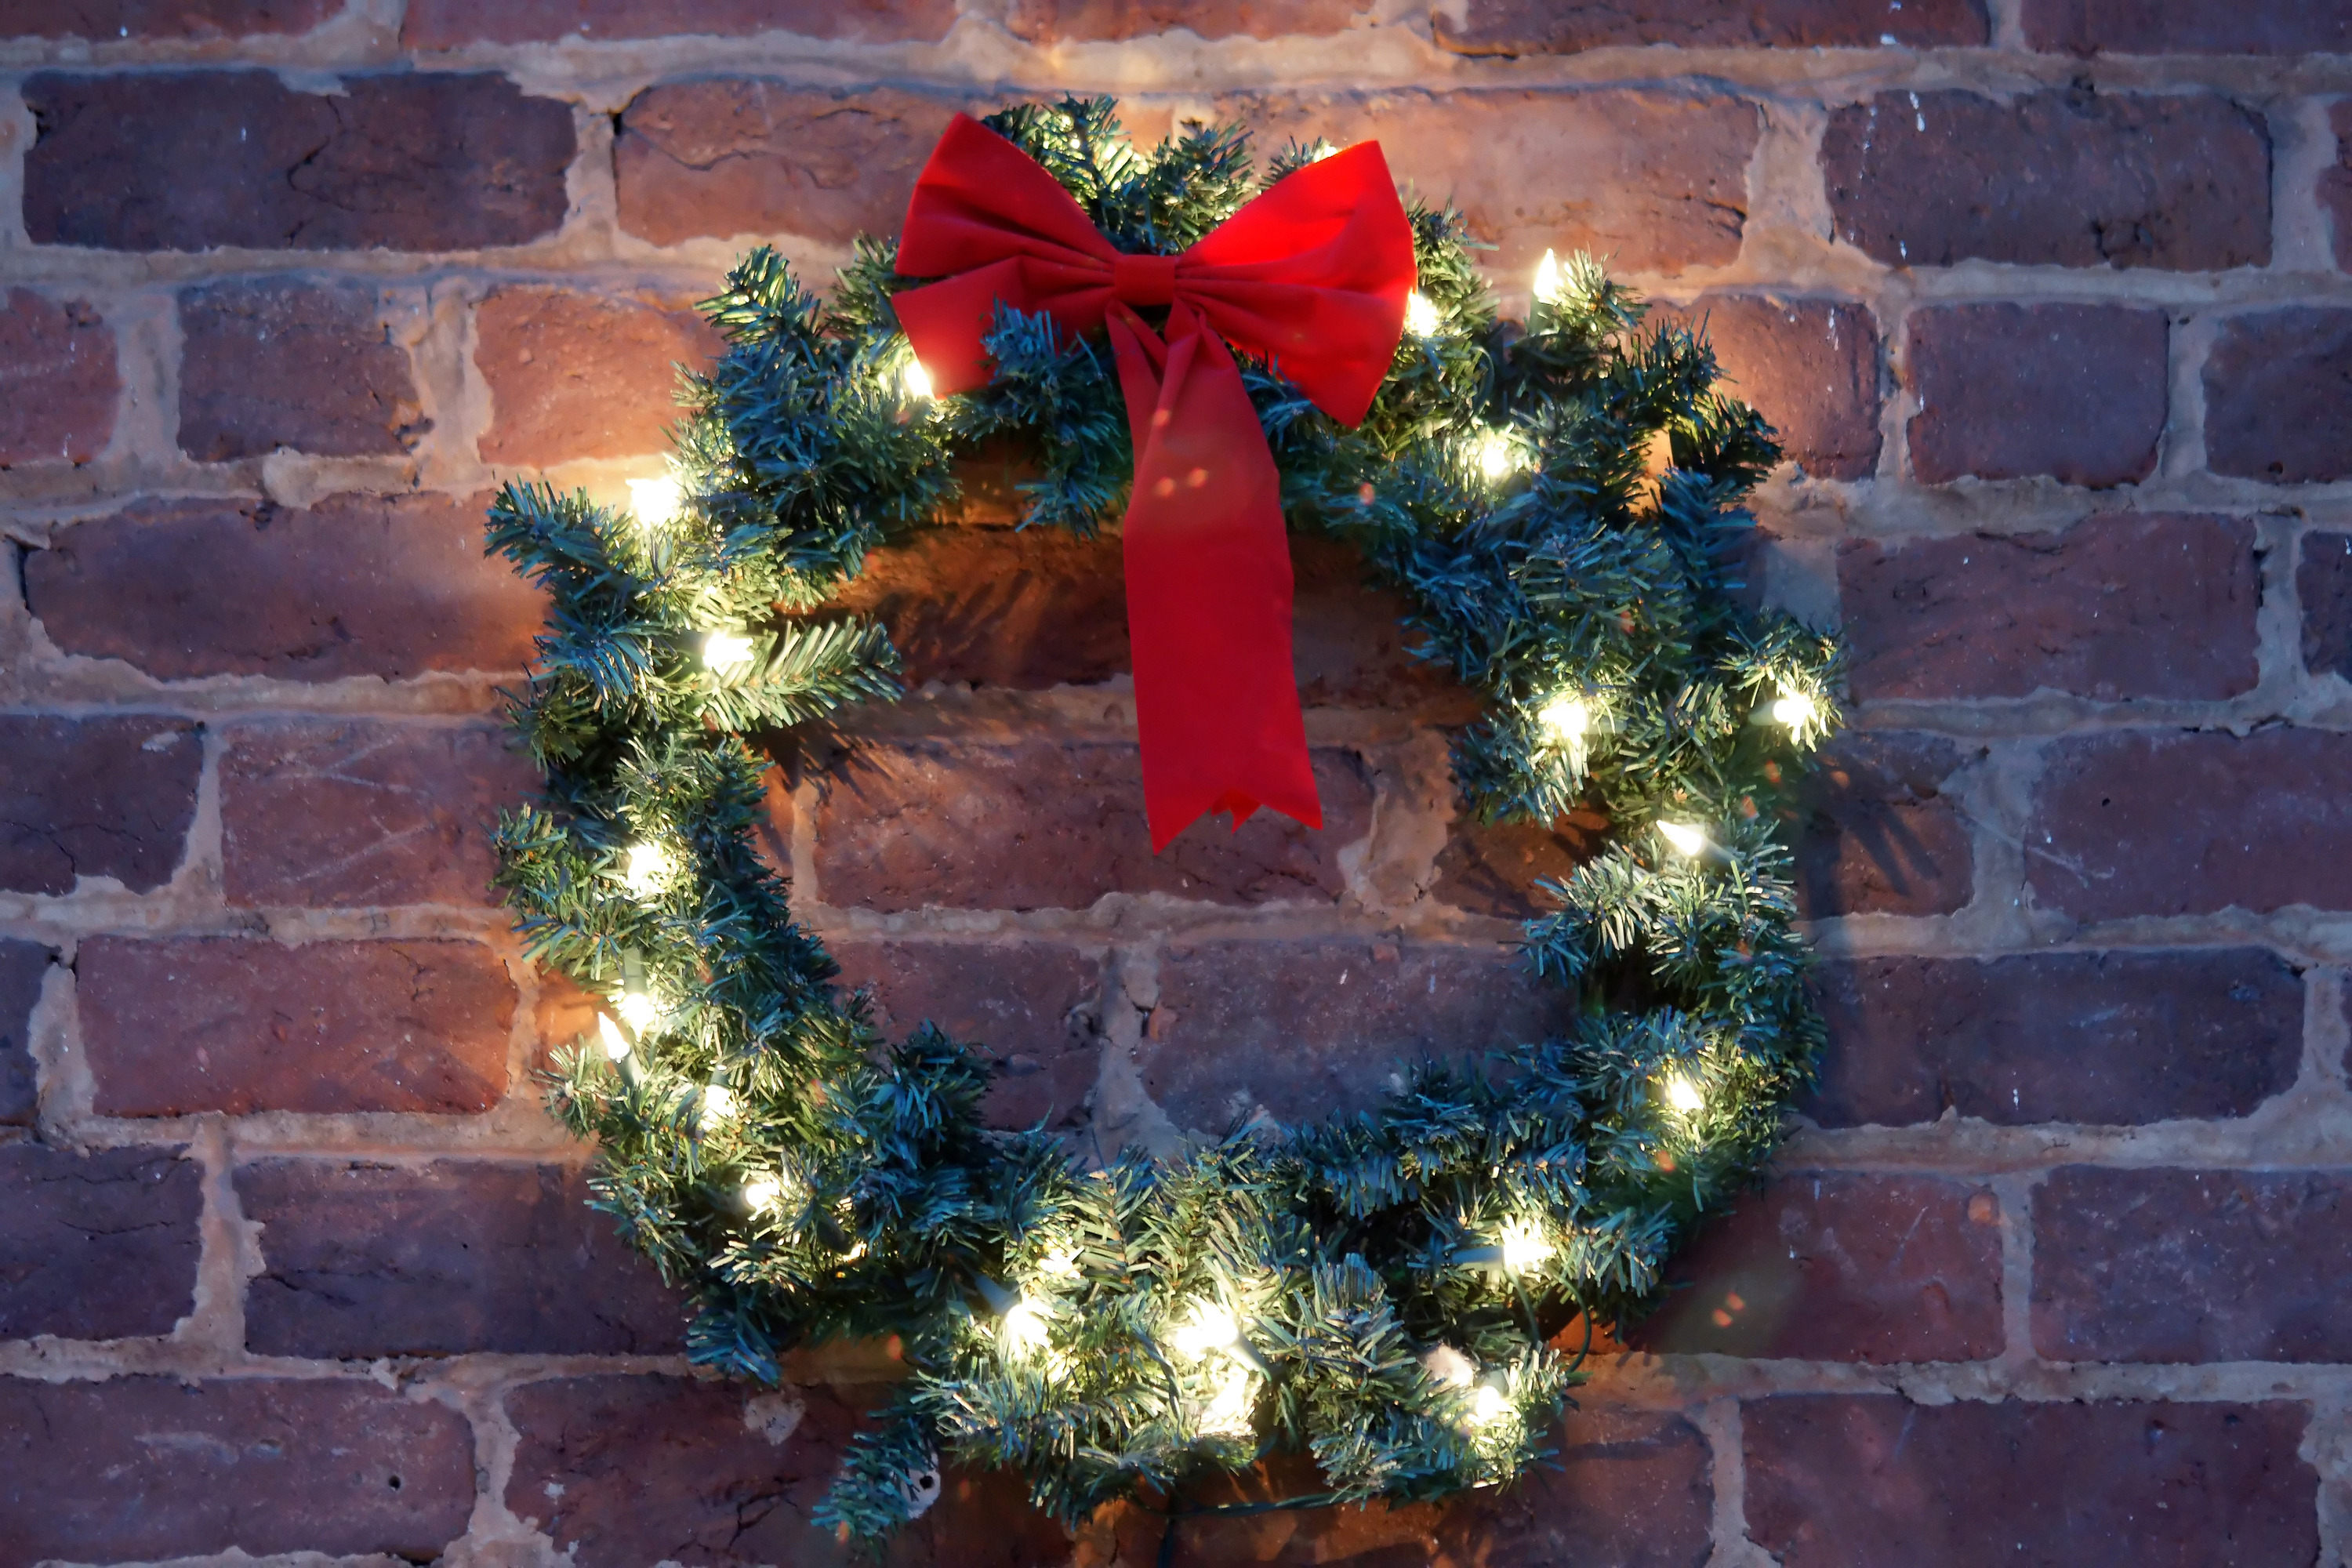 Metal Brick Clip Hang wreath lights stocking & decorations on Brick Surfaces 6pk 